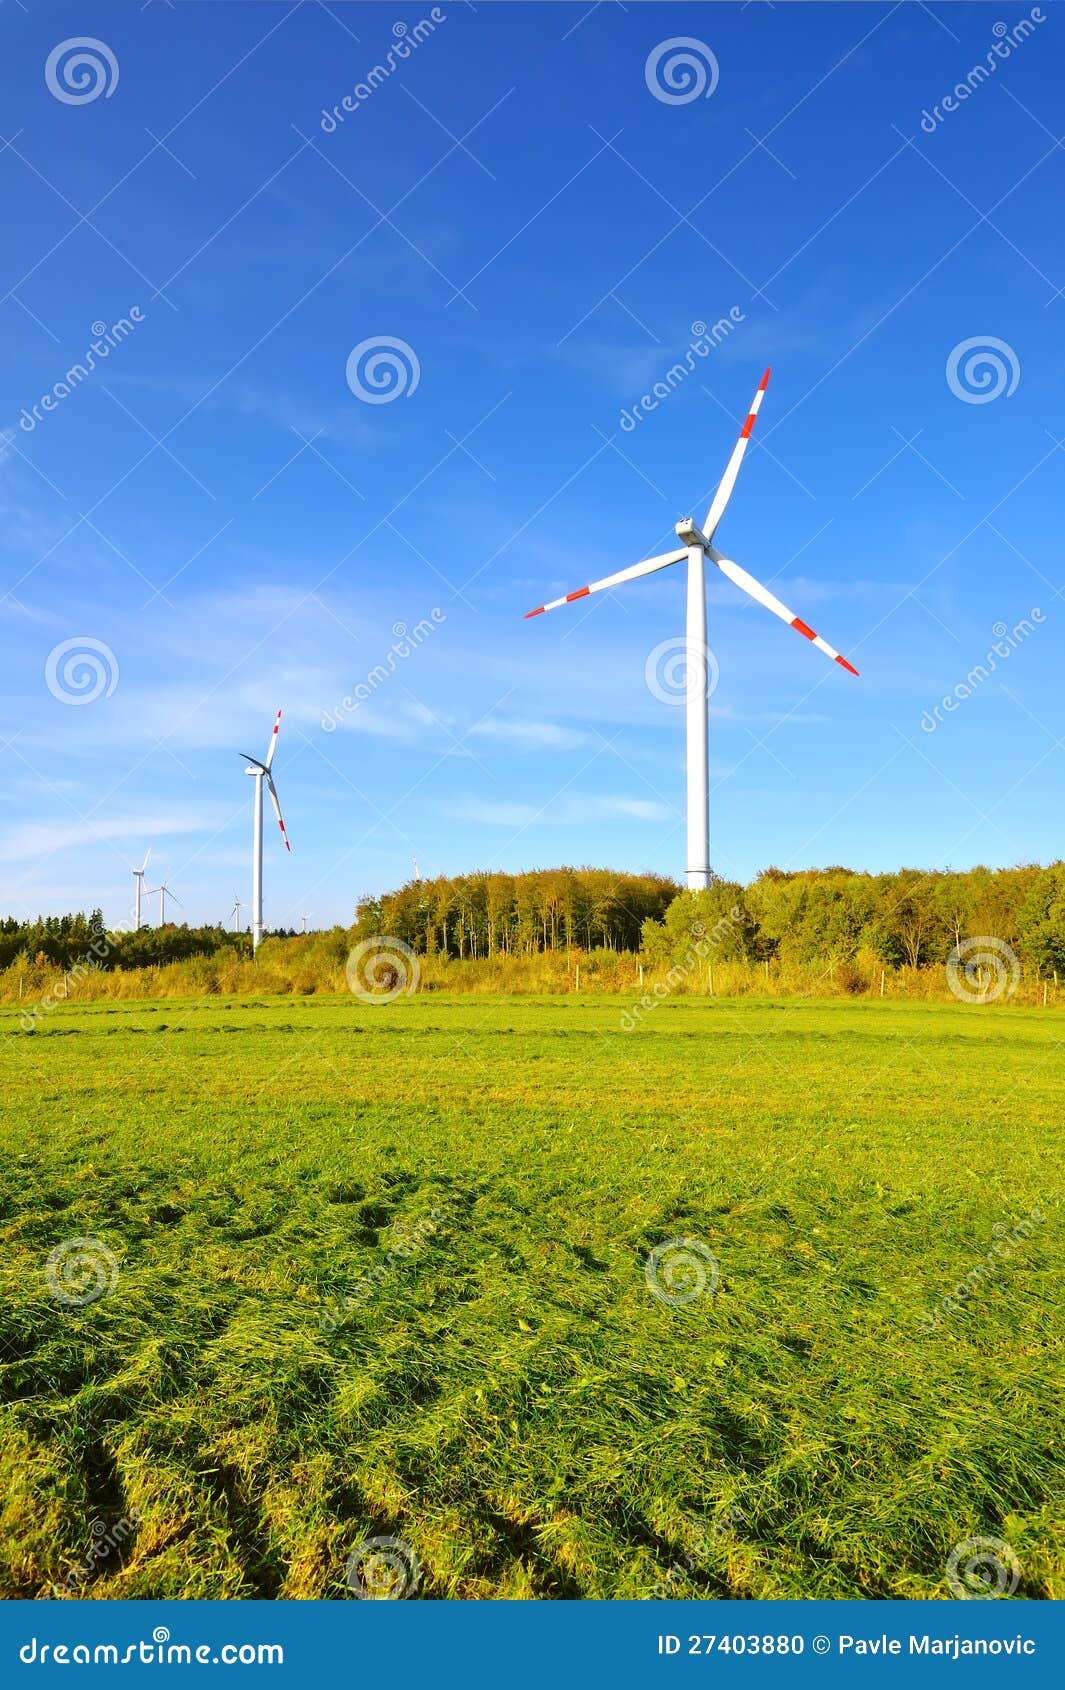 Wind Turbines Generating Electricity Stock Photo - Image: 27403880